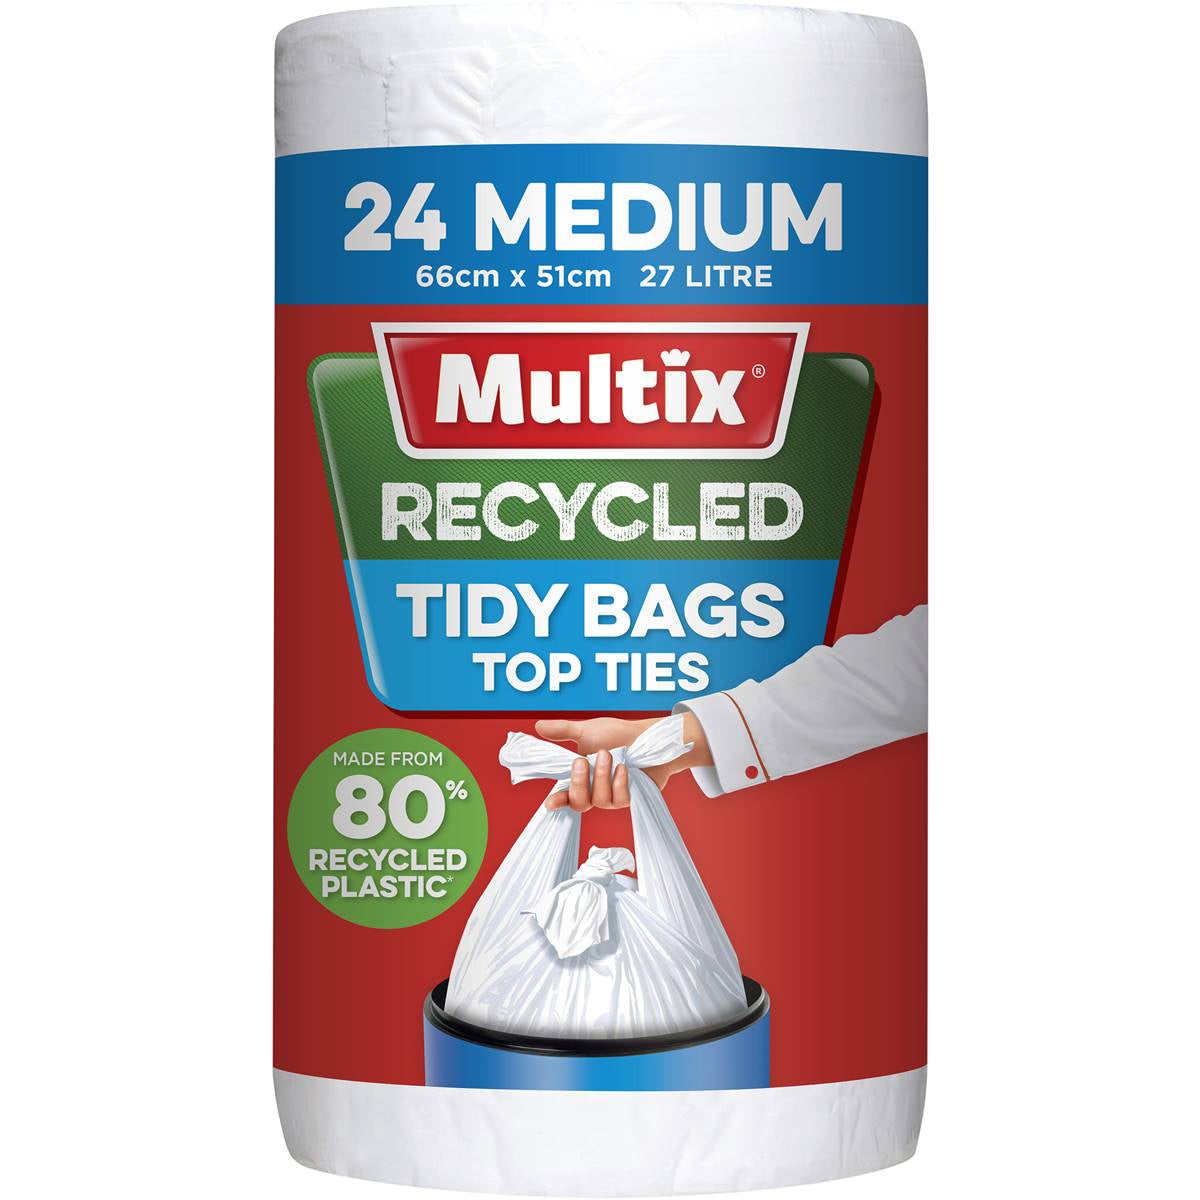 Multix Recycled Tidy Bags Tie Tops Medium 24pk